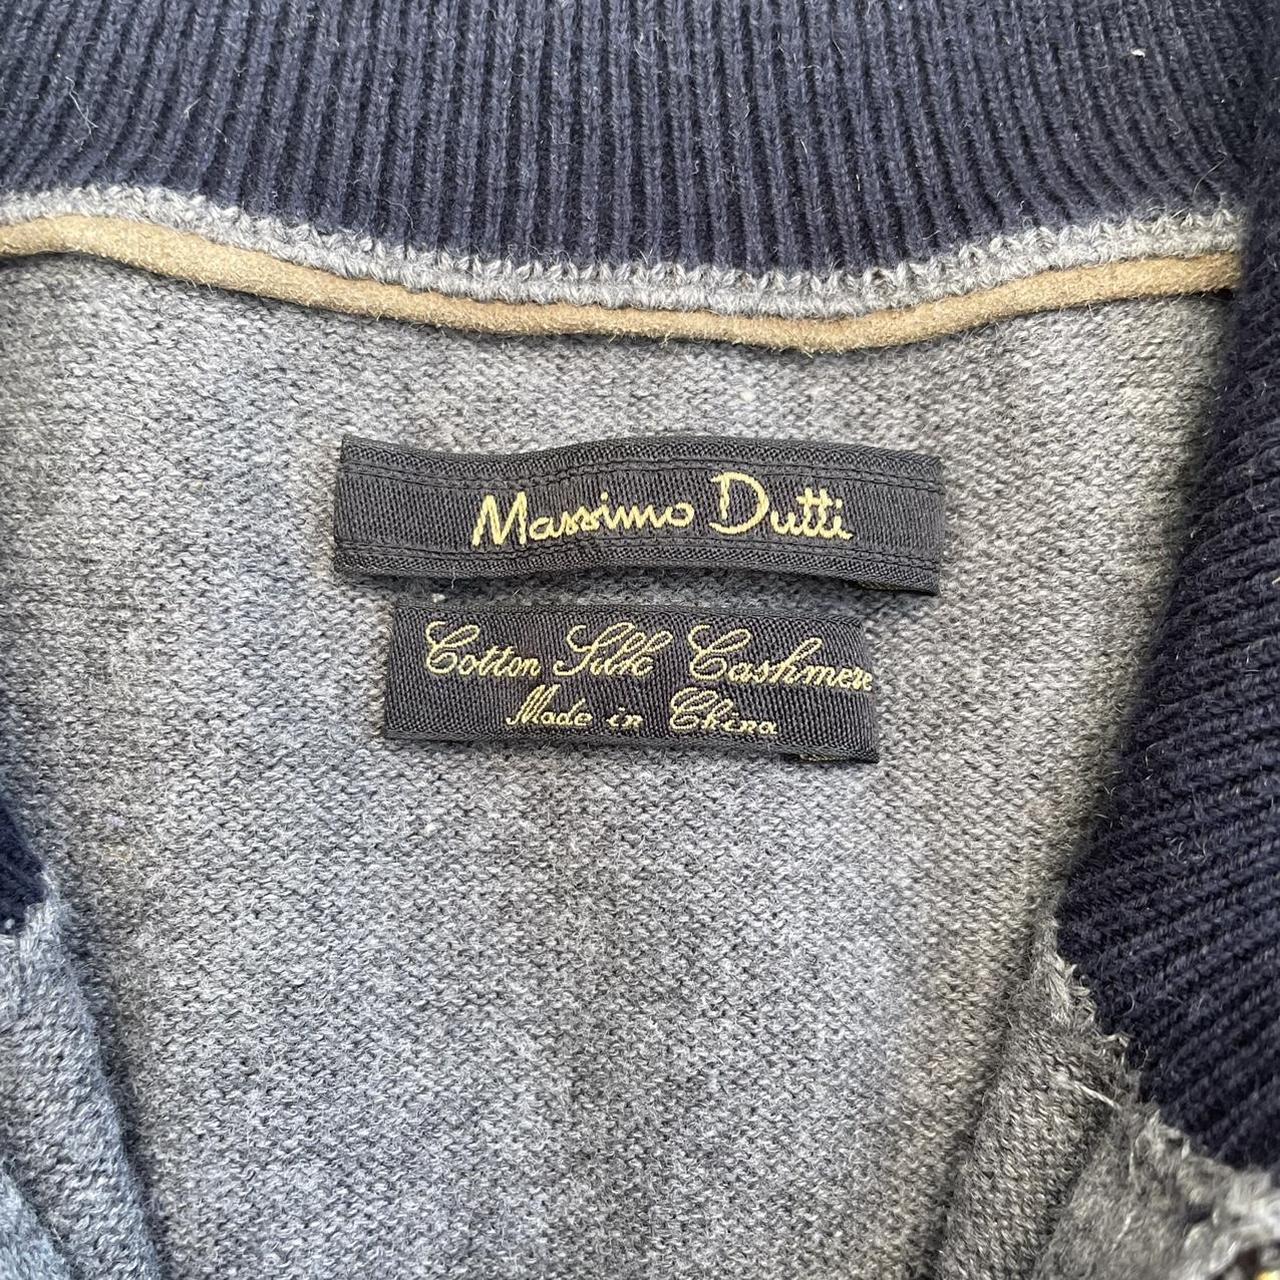 Massimo Dutti Cotton Silk Cashmere Half Zip... - Depop